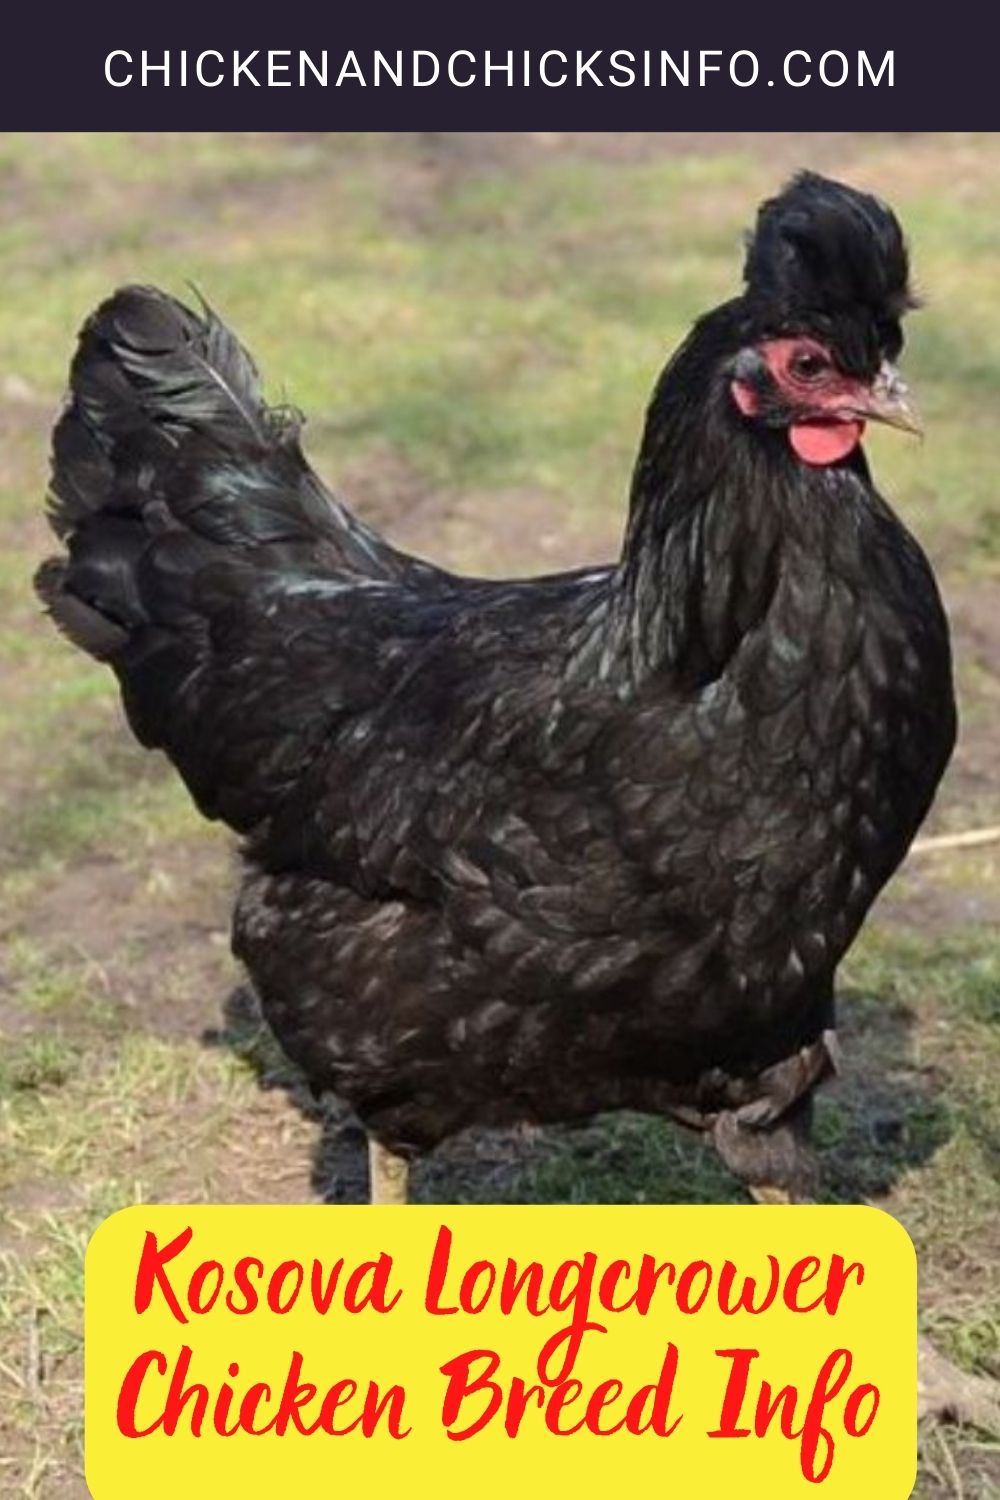 Kosova Longcrower Chicken Breed Info pinterest image.